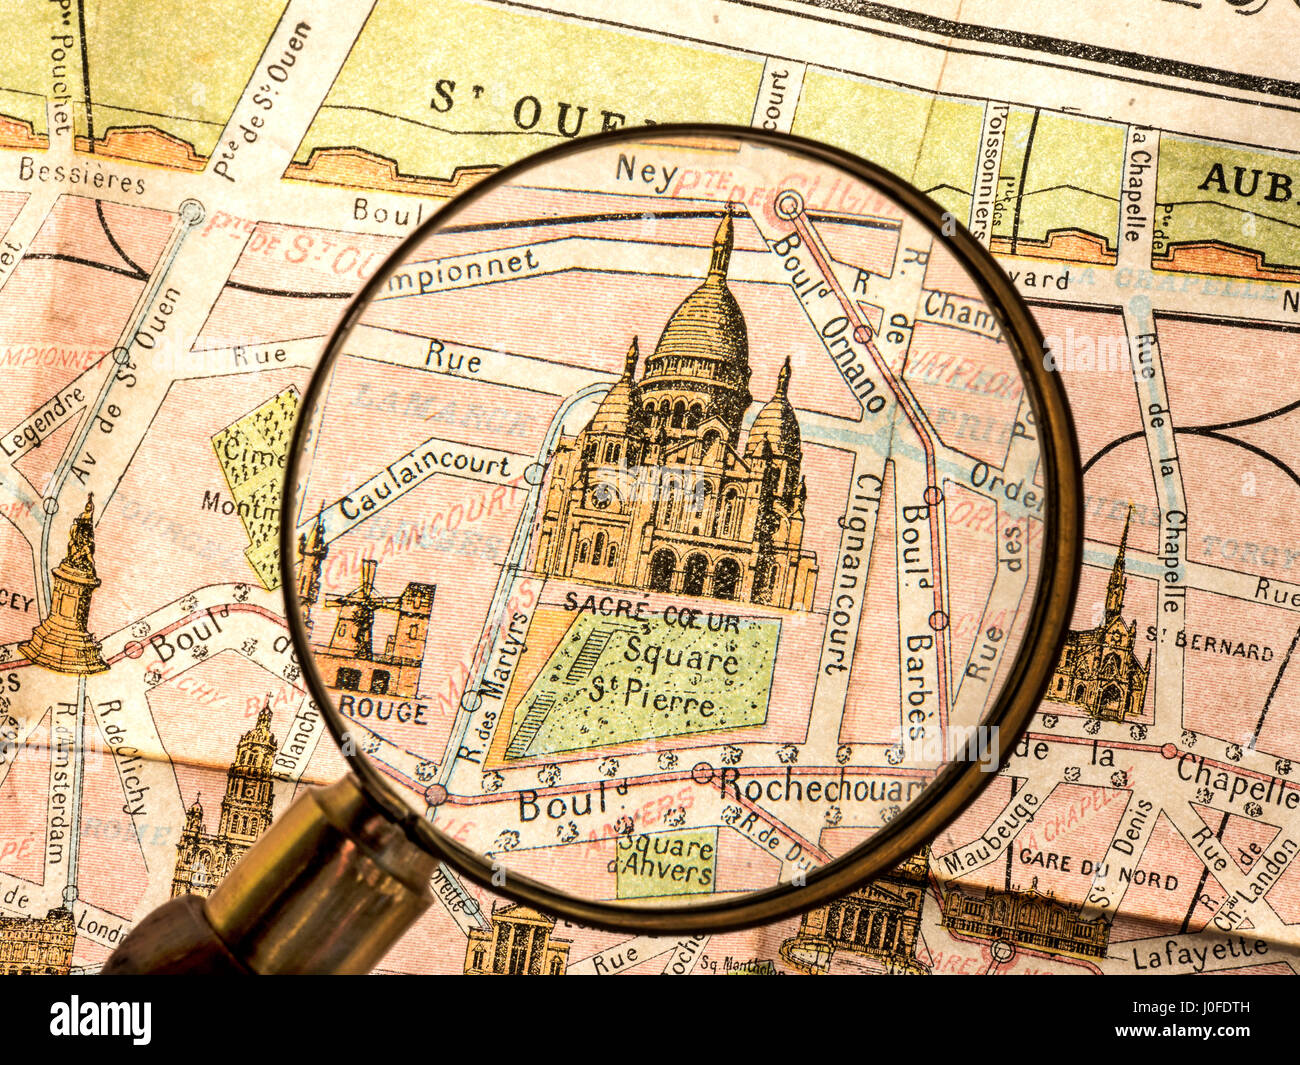 PARIS DETAIL MAP Magnifying Glass vintage retro Monumental Map of 1900's Paris, featuring Sacre Coeur Basilica Montmartre and The Moulin Rouge Theatre Stock Photo